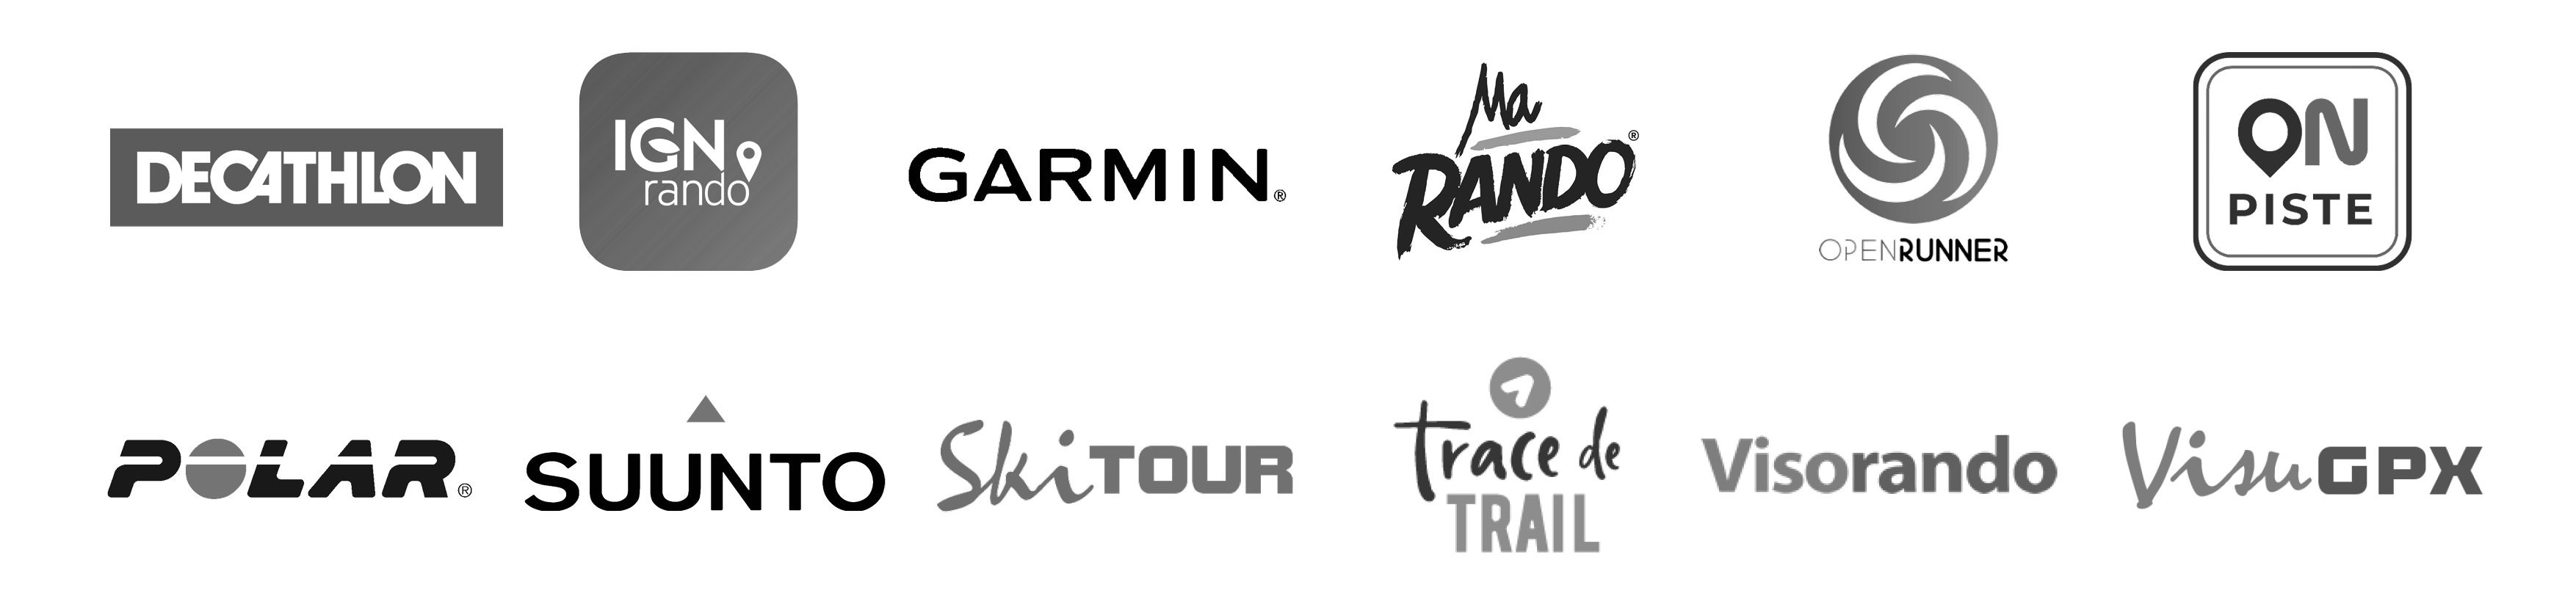 Camptocamp, Suunto, Trace de trail, Decathlon, OpenRunner, Visorando, Garmin, OnPiste, Polar, IGNrando, SkiTour, VisuGPX